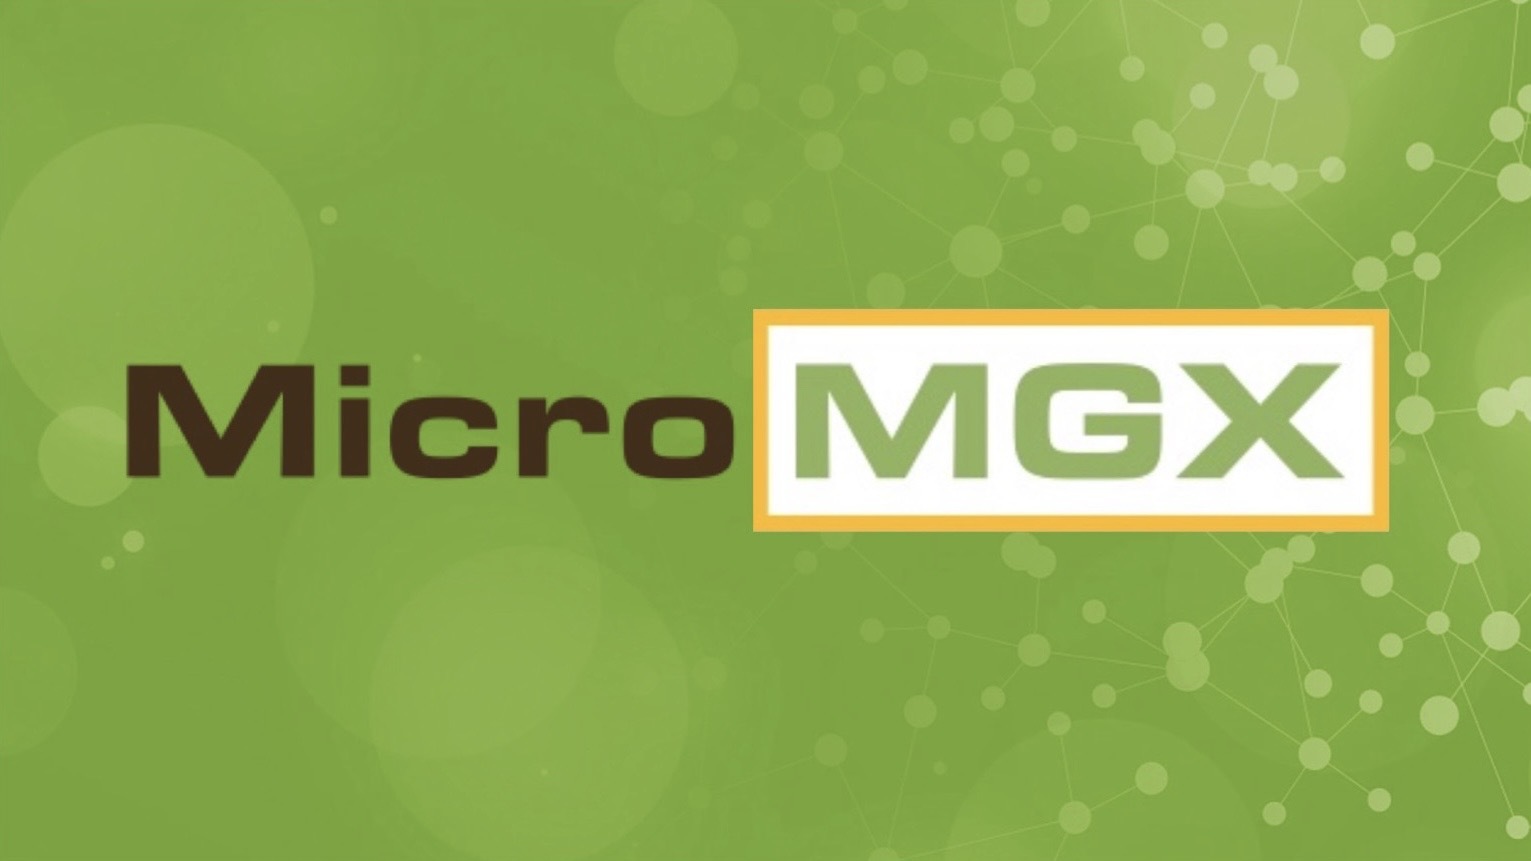 MicroMGx Inc